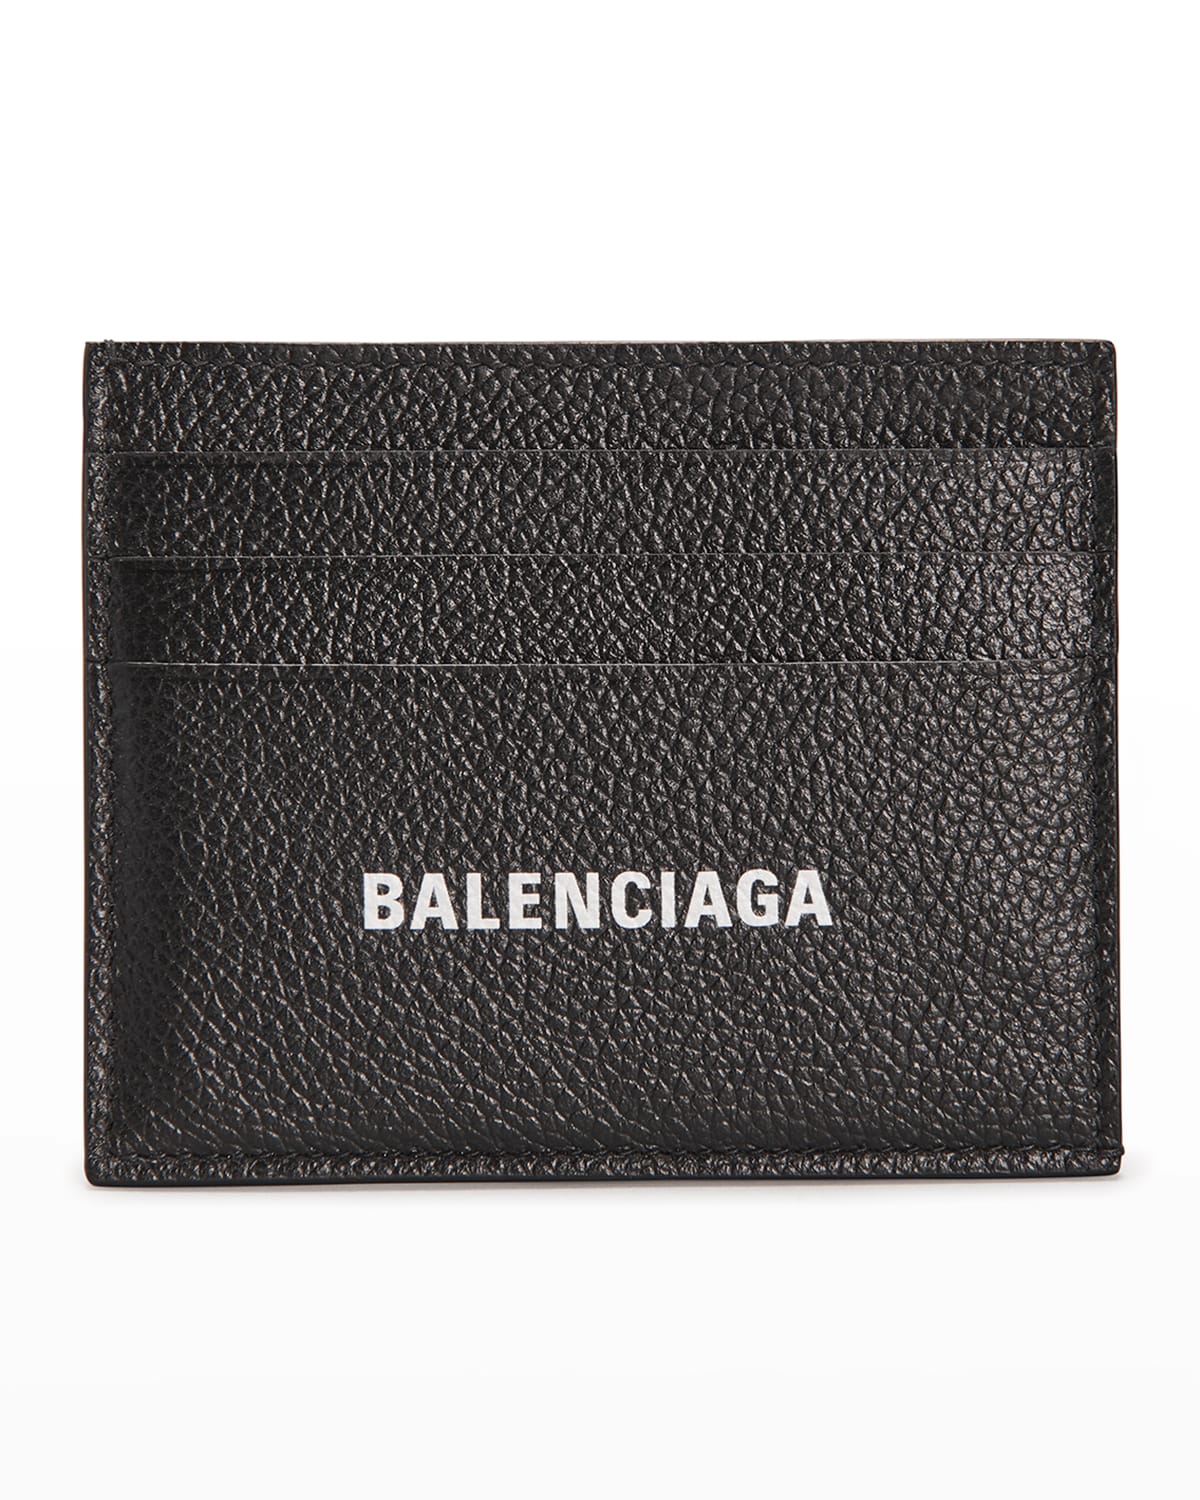 Balenciaga Men's Calfskin Cash Card Holder In Noir/ecru